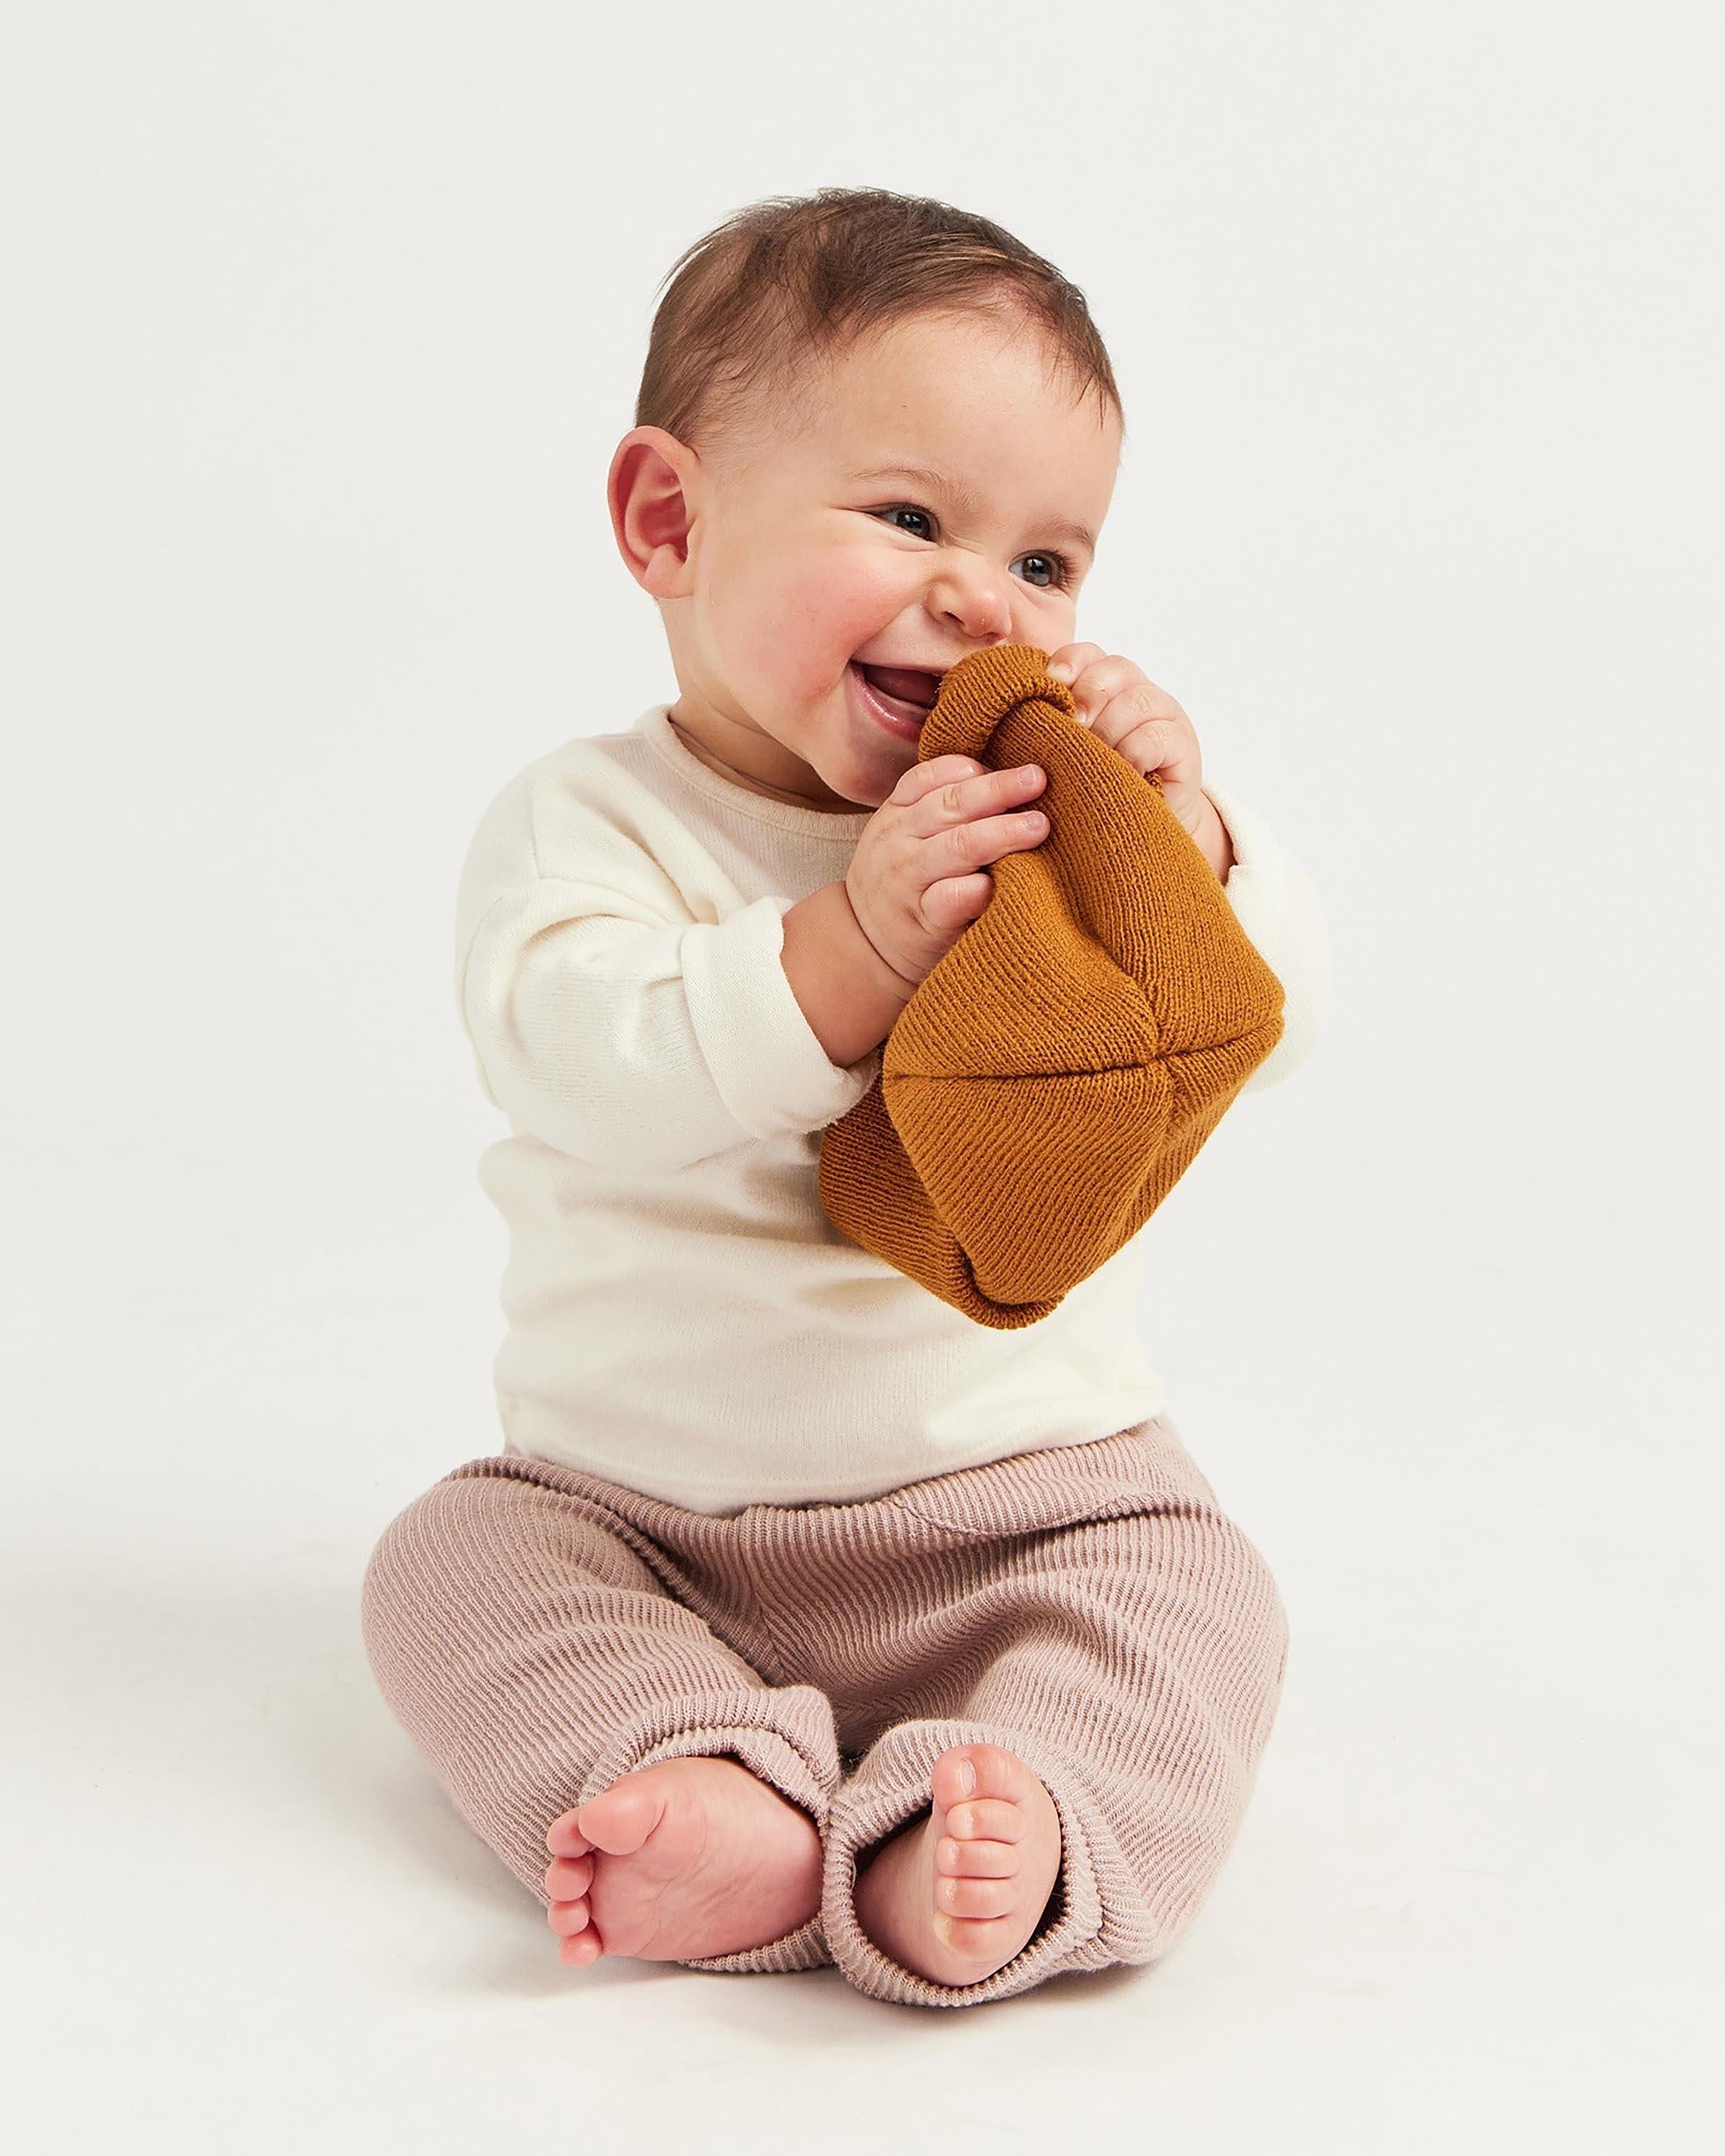 Baby Beacon Beanie in Copper - undefined - Hemlock Hat Co. Beanies - Baby